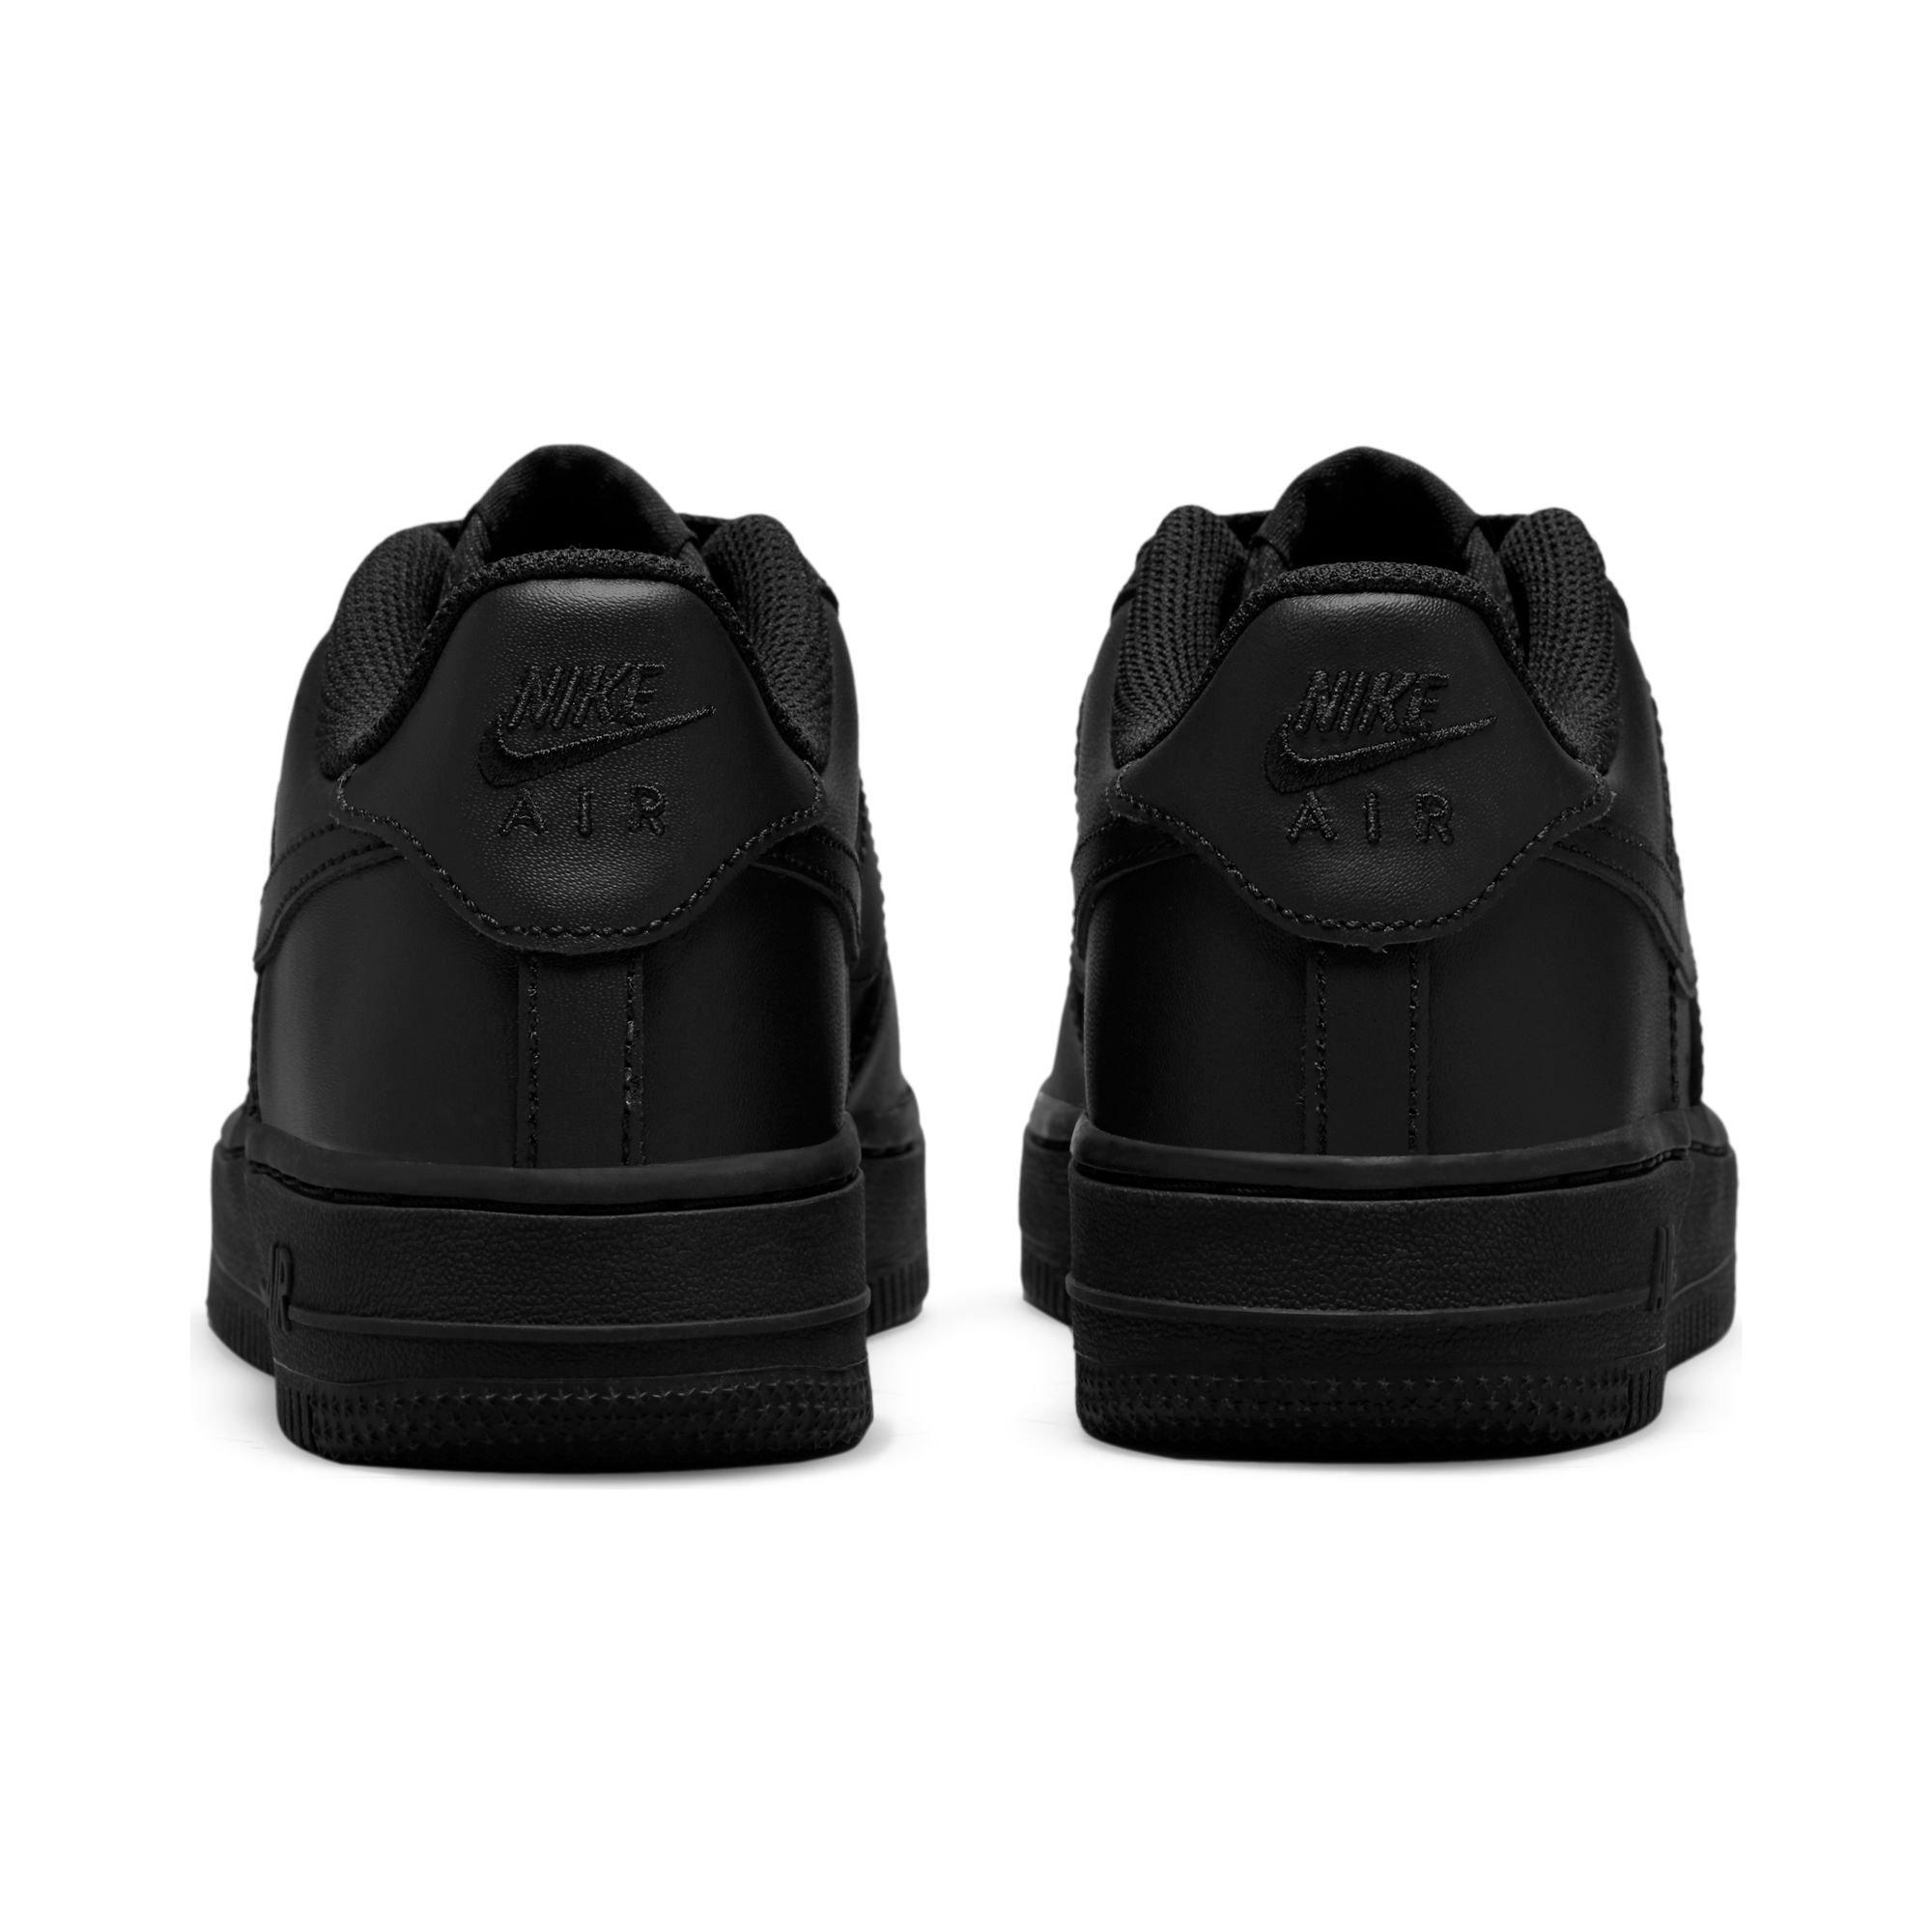 Nike Air Force 1 High Le Black/Black Grade School Kids' Shoes, Size: 7